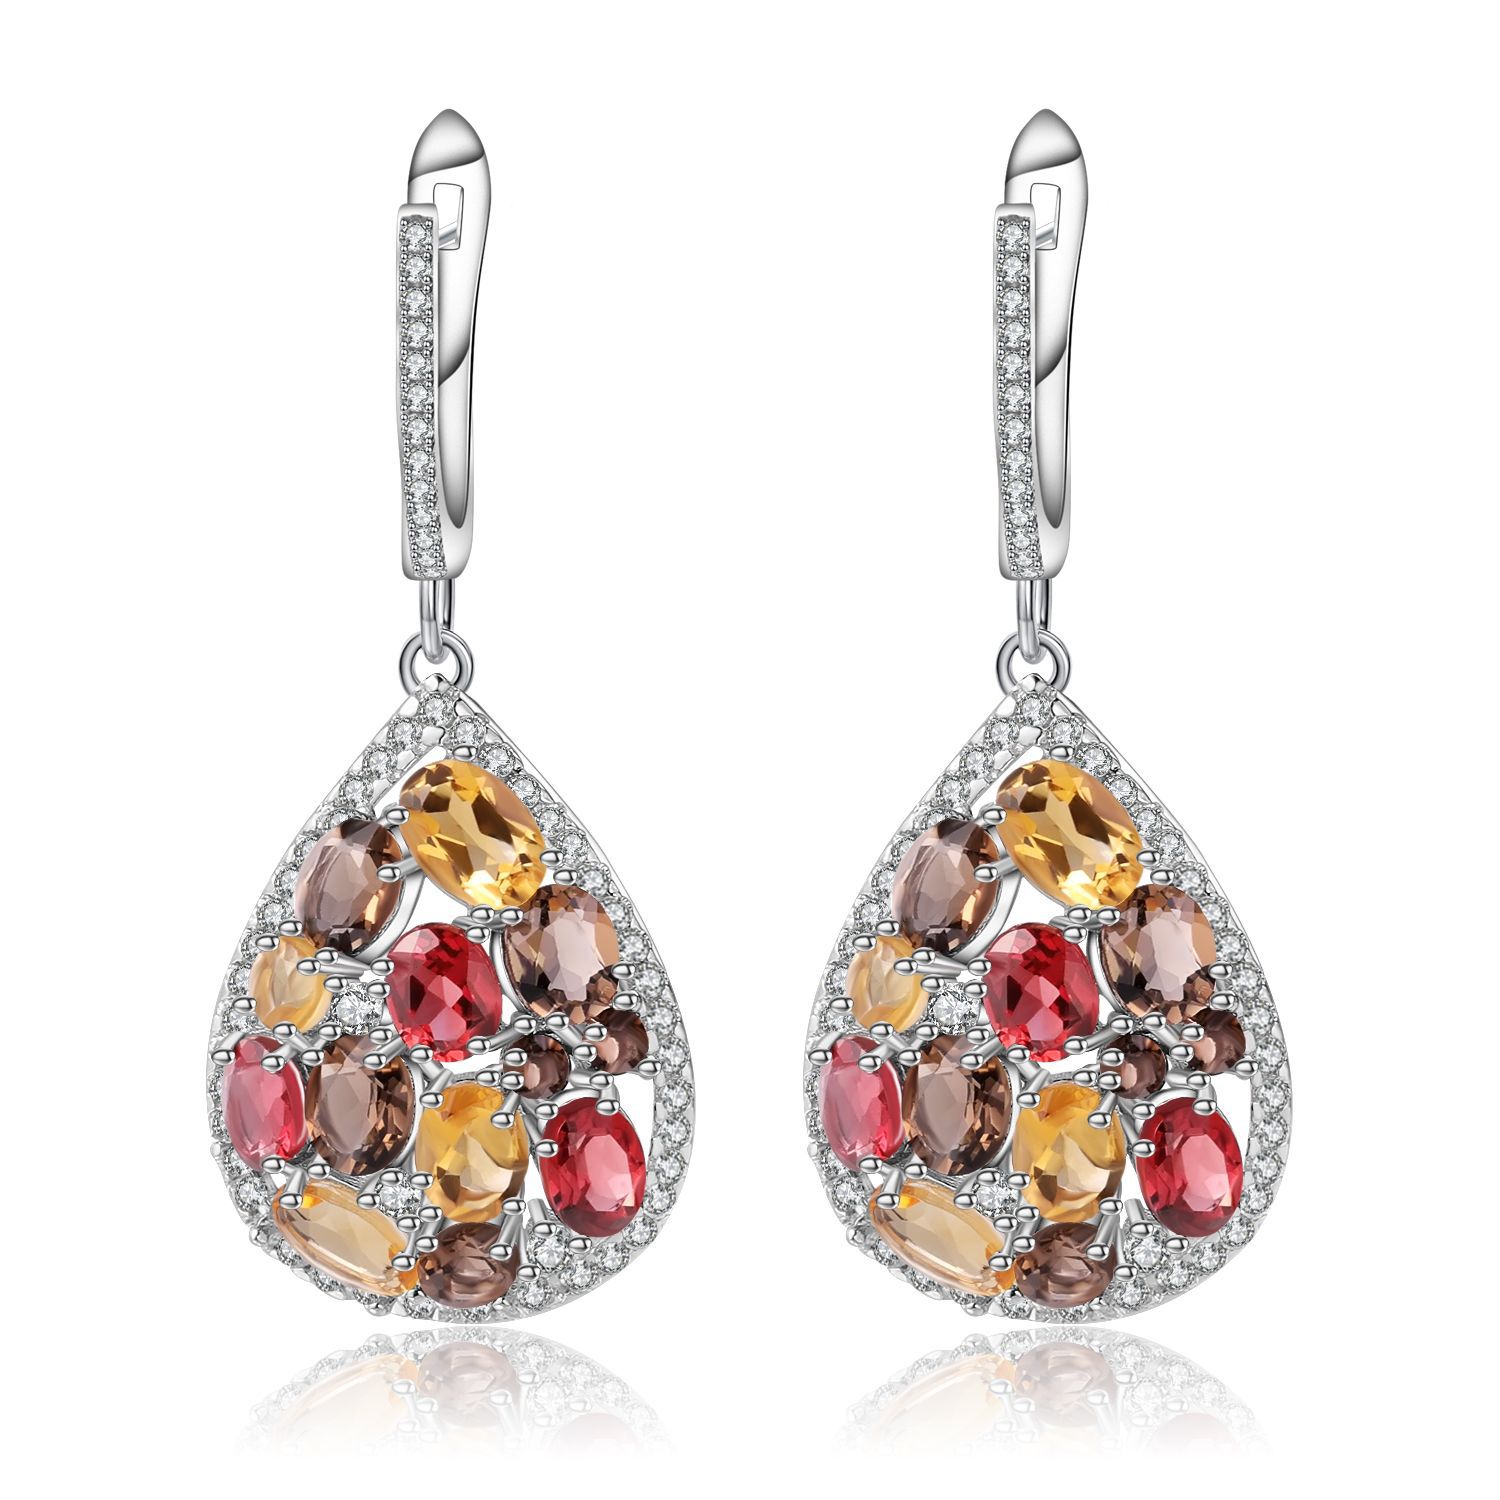 Grazia Jewelry Gemstone Mosaic Earrings